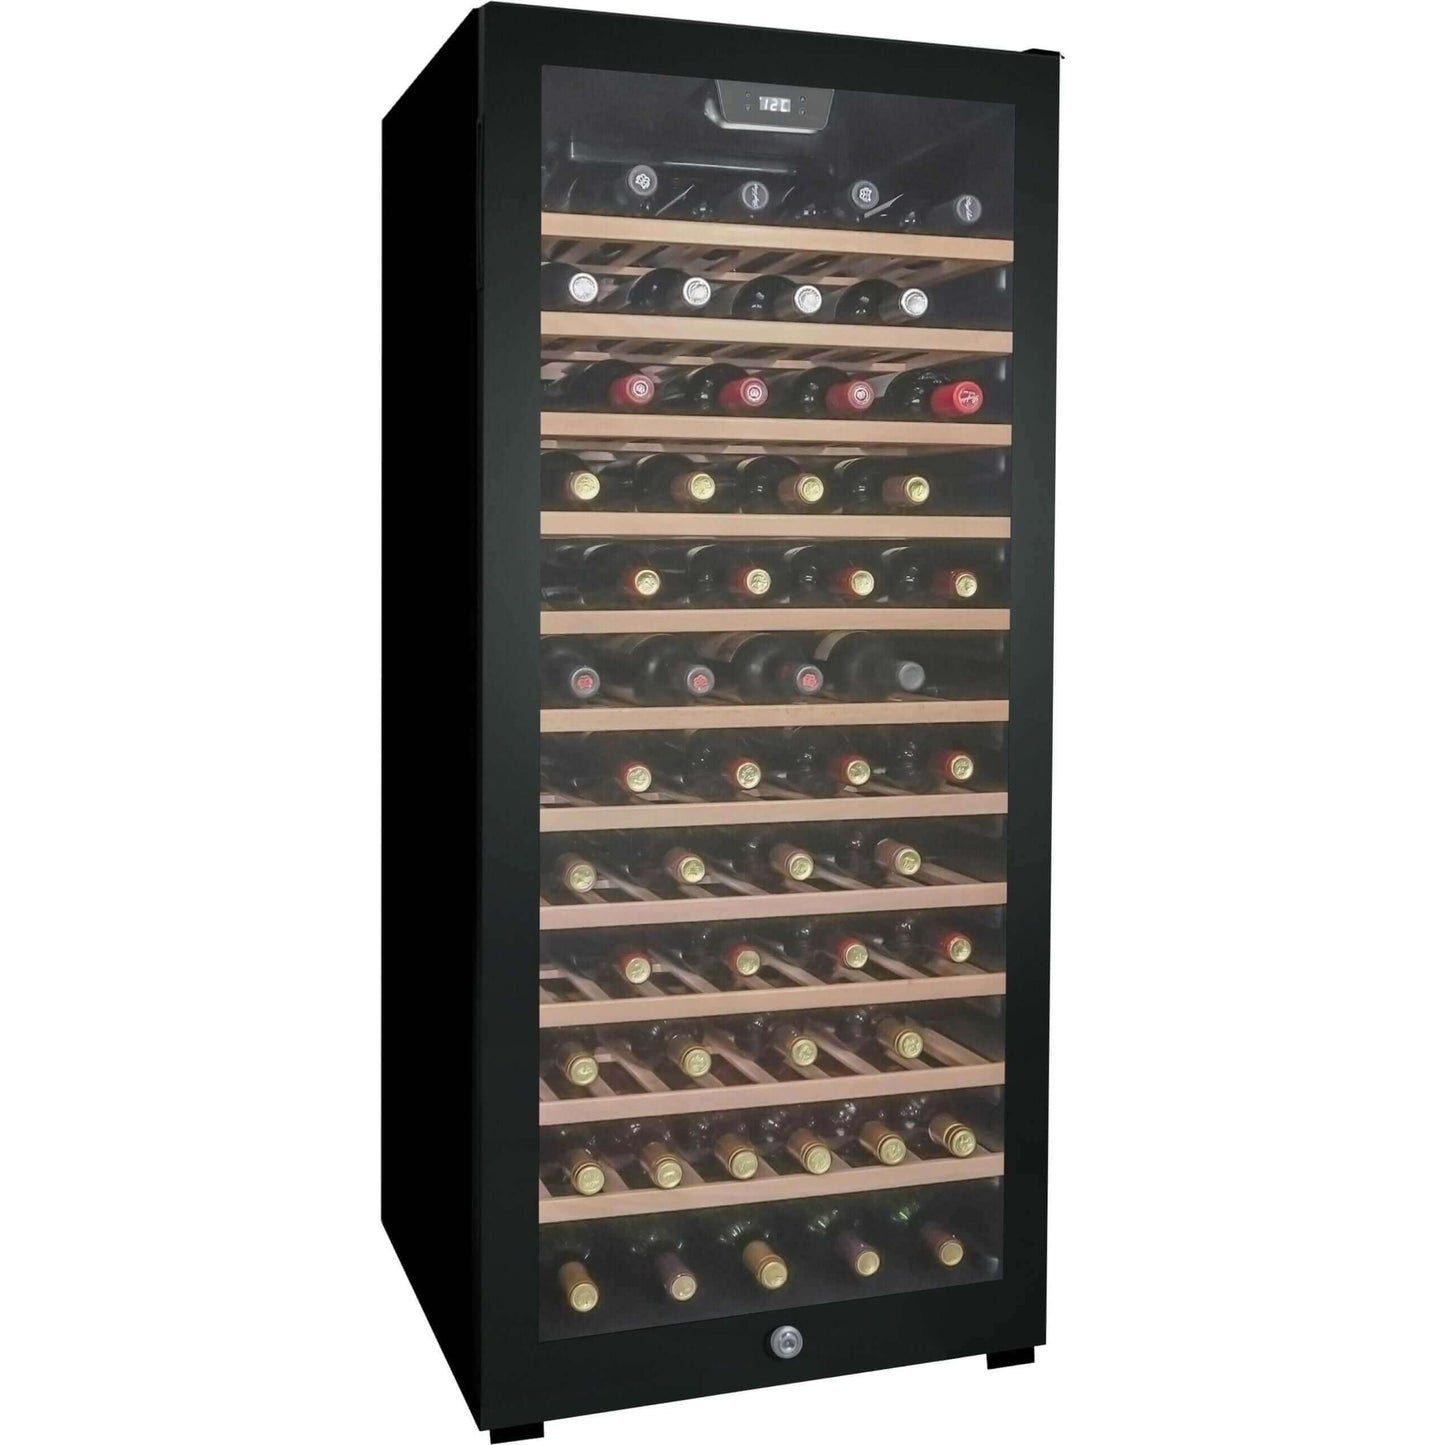 Danby 94 Bottle Free-Standing Wine Cooler in Black